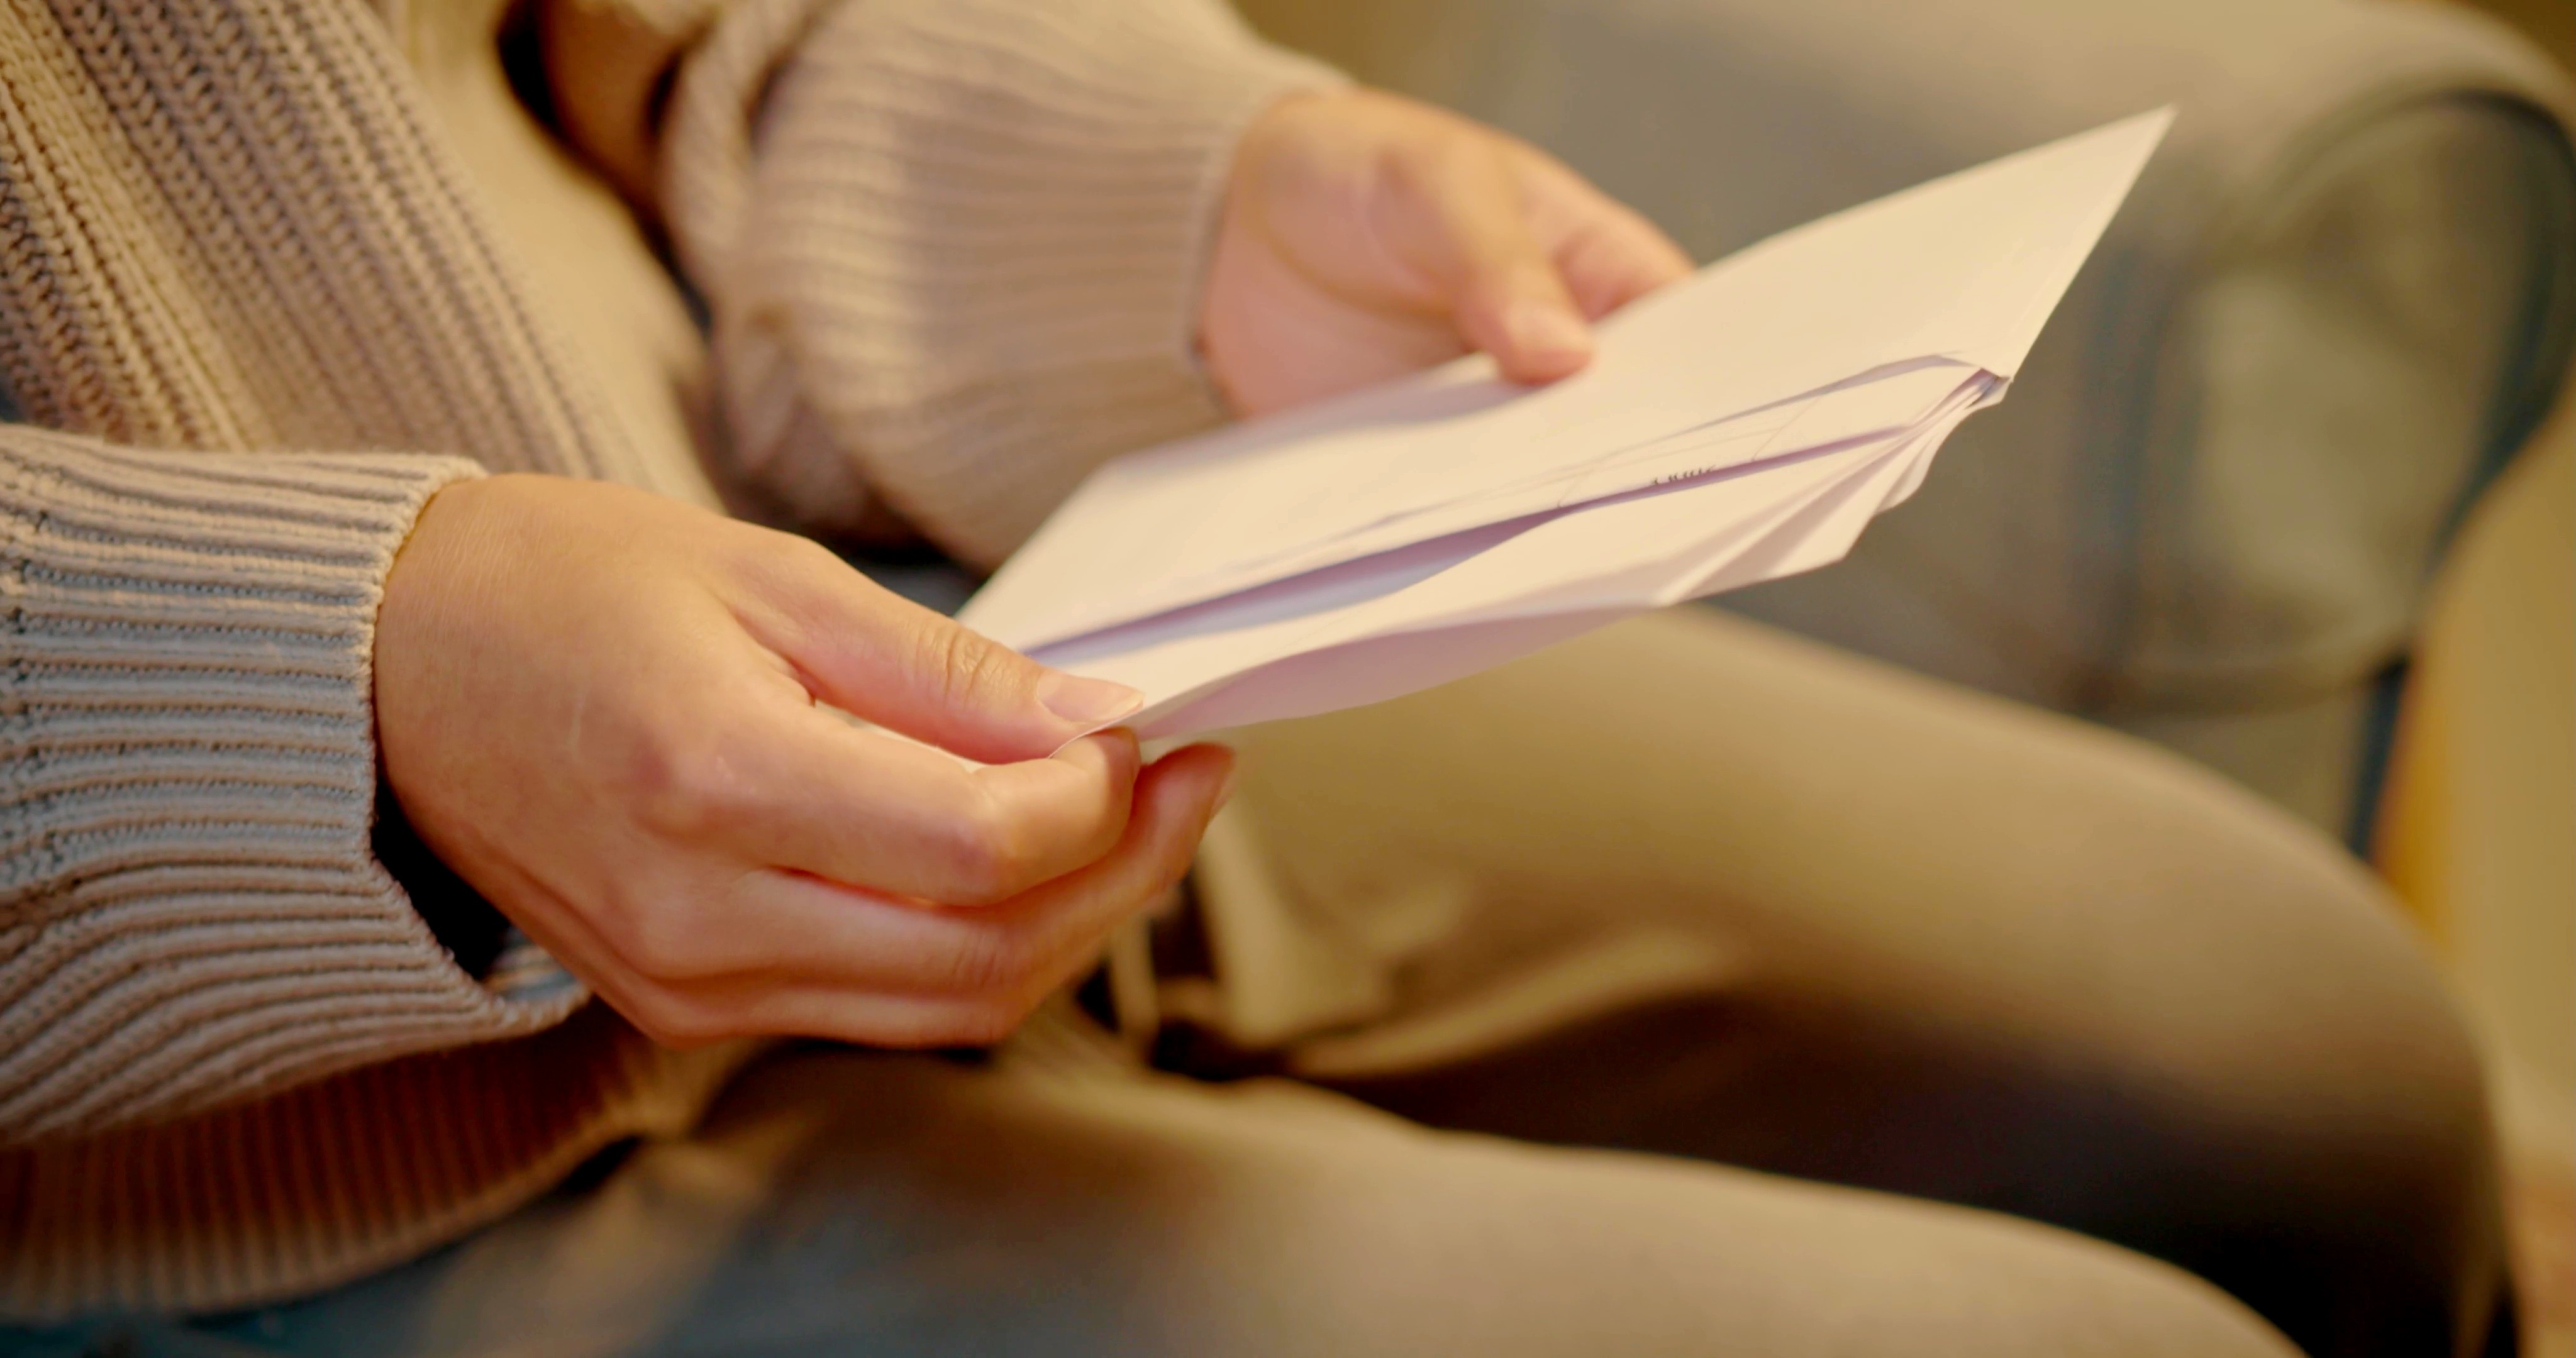 Woman opening an envelope | Source: Shutterstock